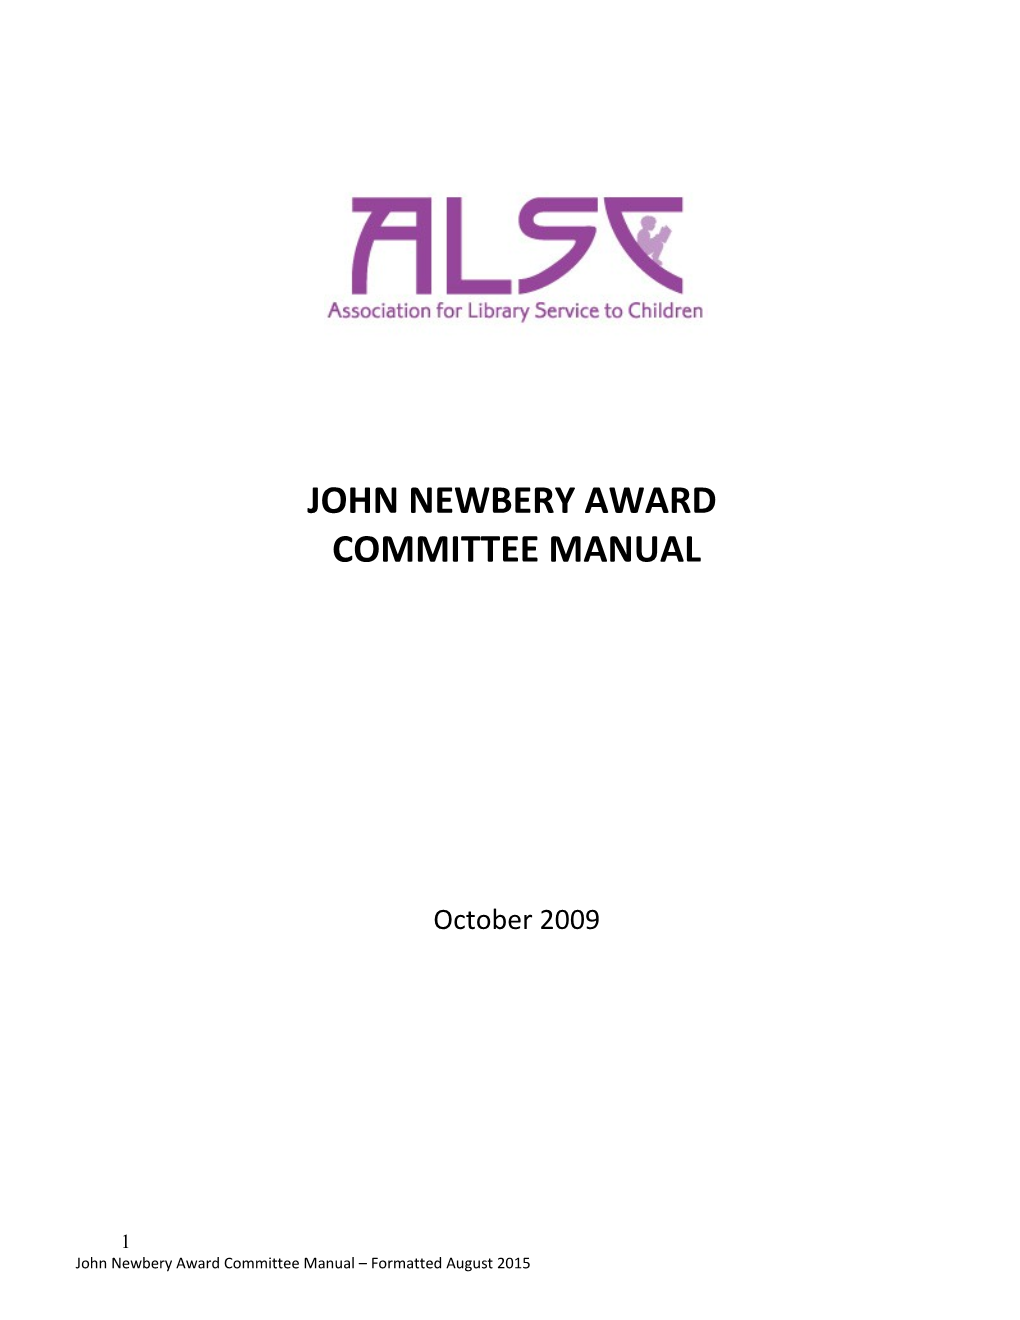 Newbery Award Committee Manual